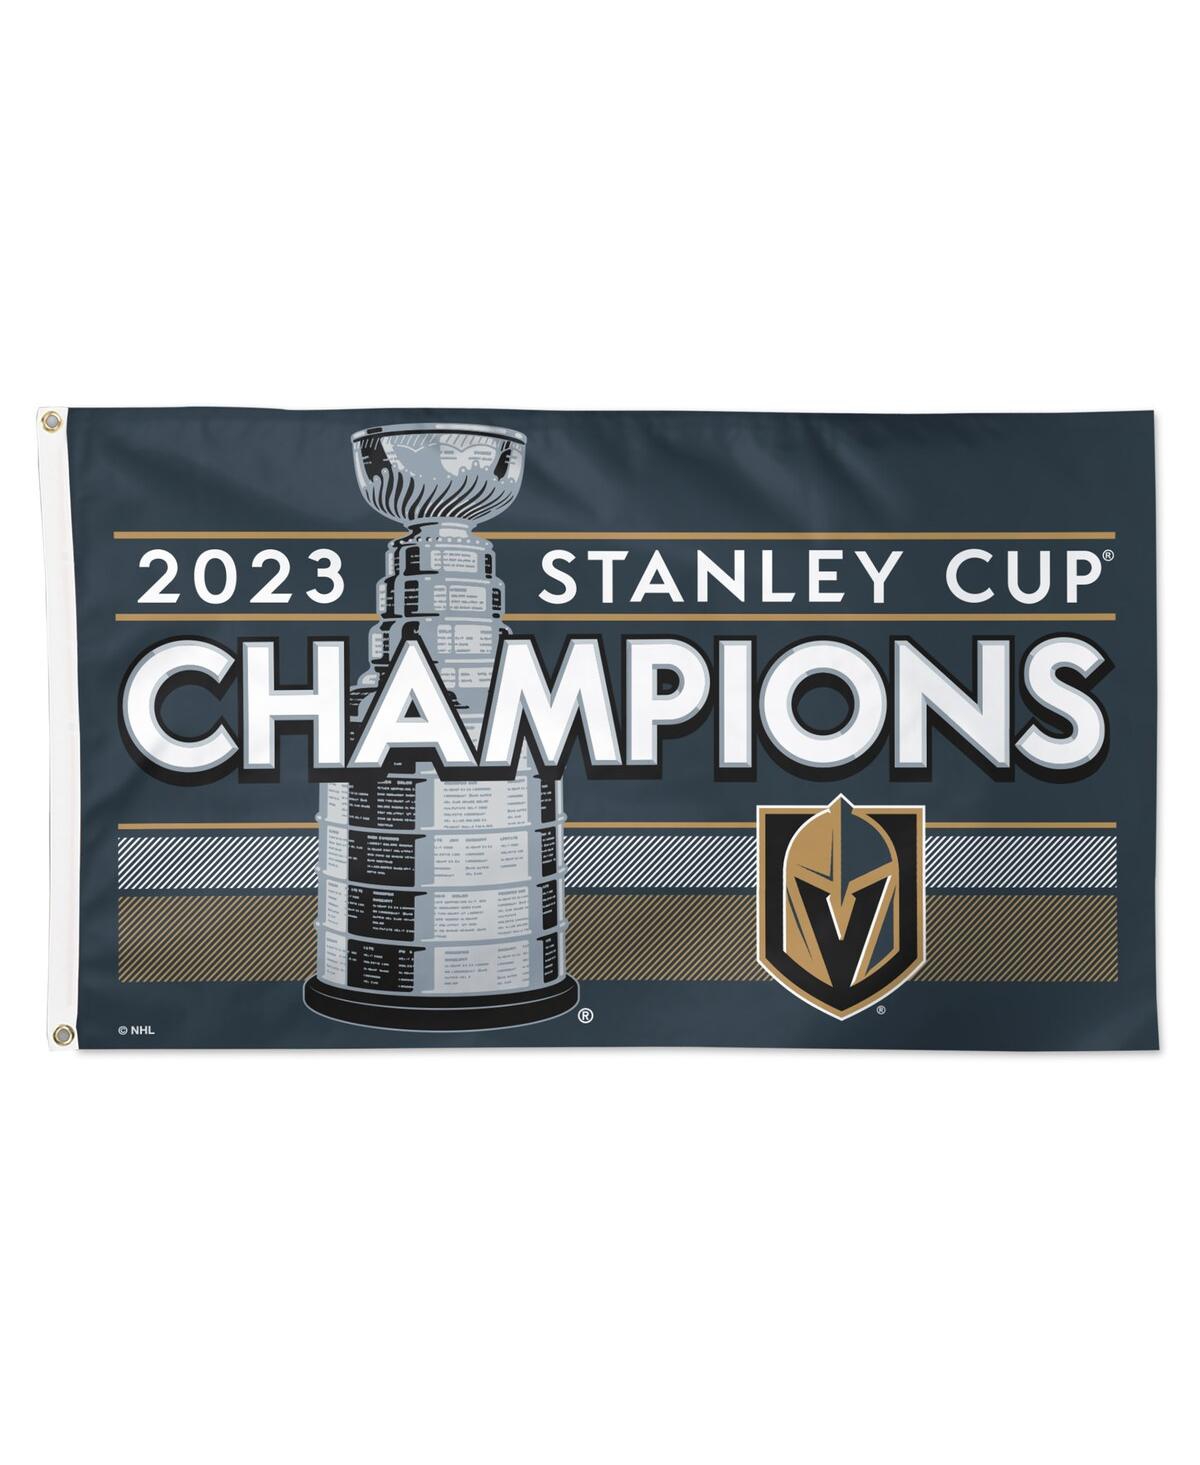 BLACK Stanley Cup Champions 2023 Vegas Golden Knights Pet Collar